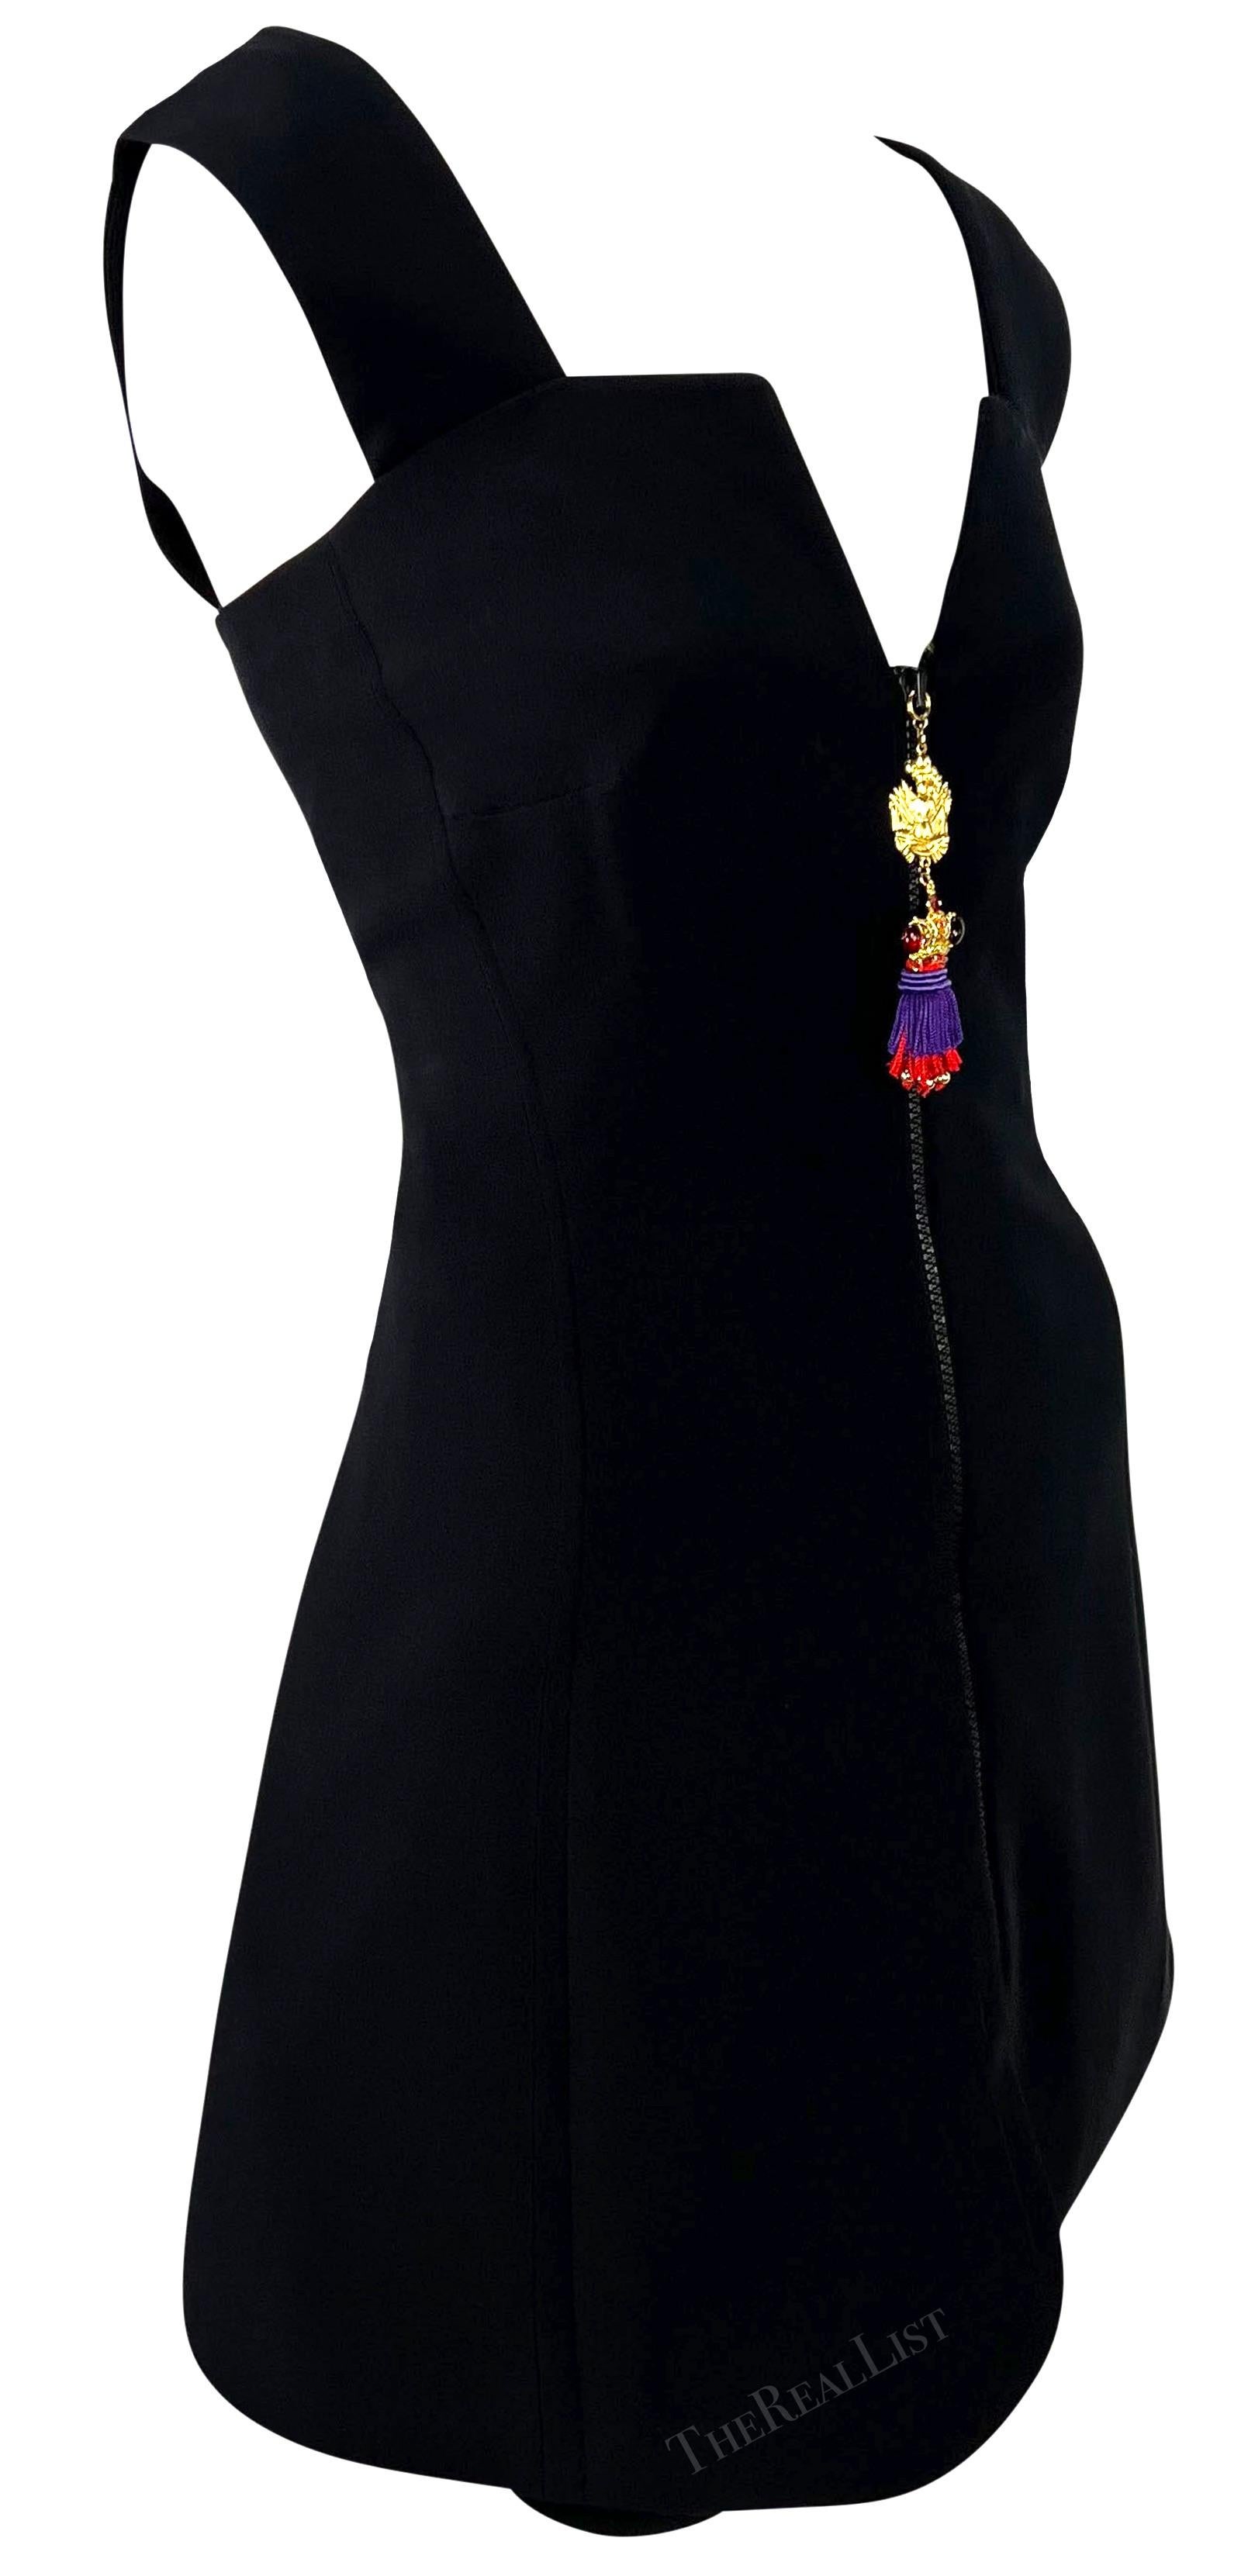 S/S 1991 Atelier Versace Haute Couture Runway Mini Dress Rhinestone Tassel Set For Sale 5